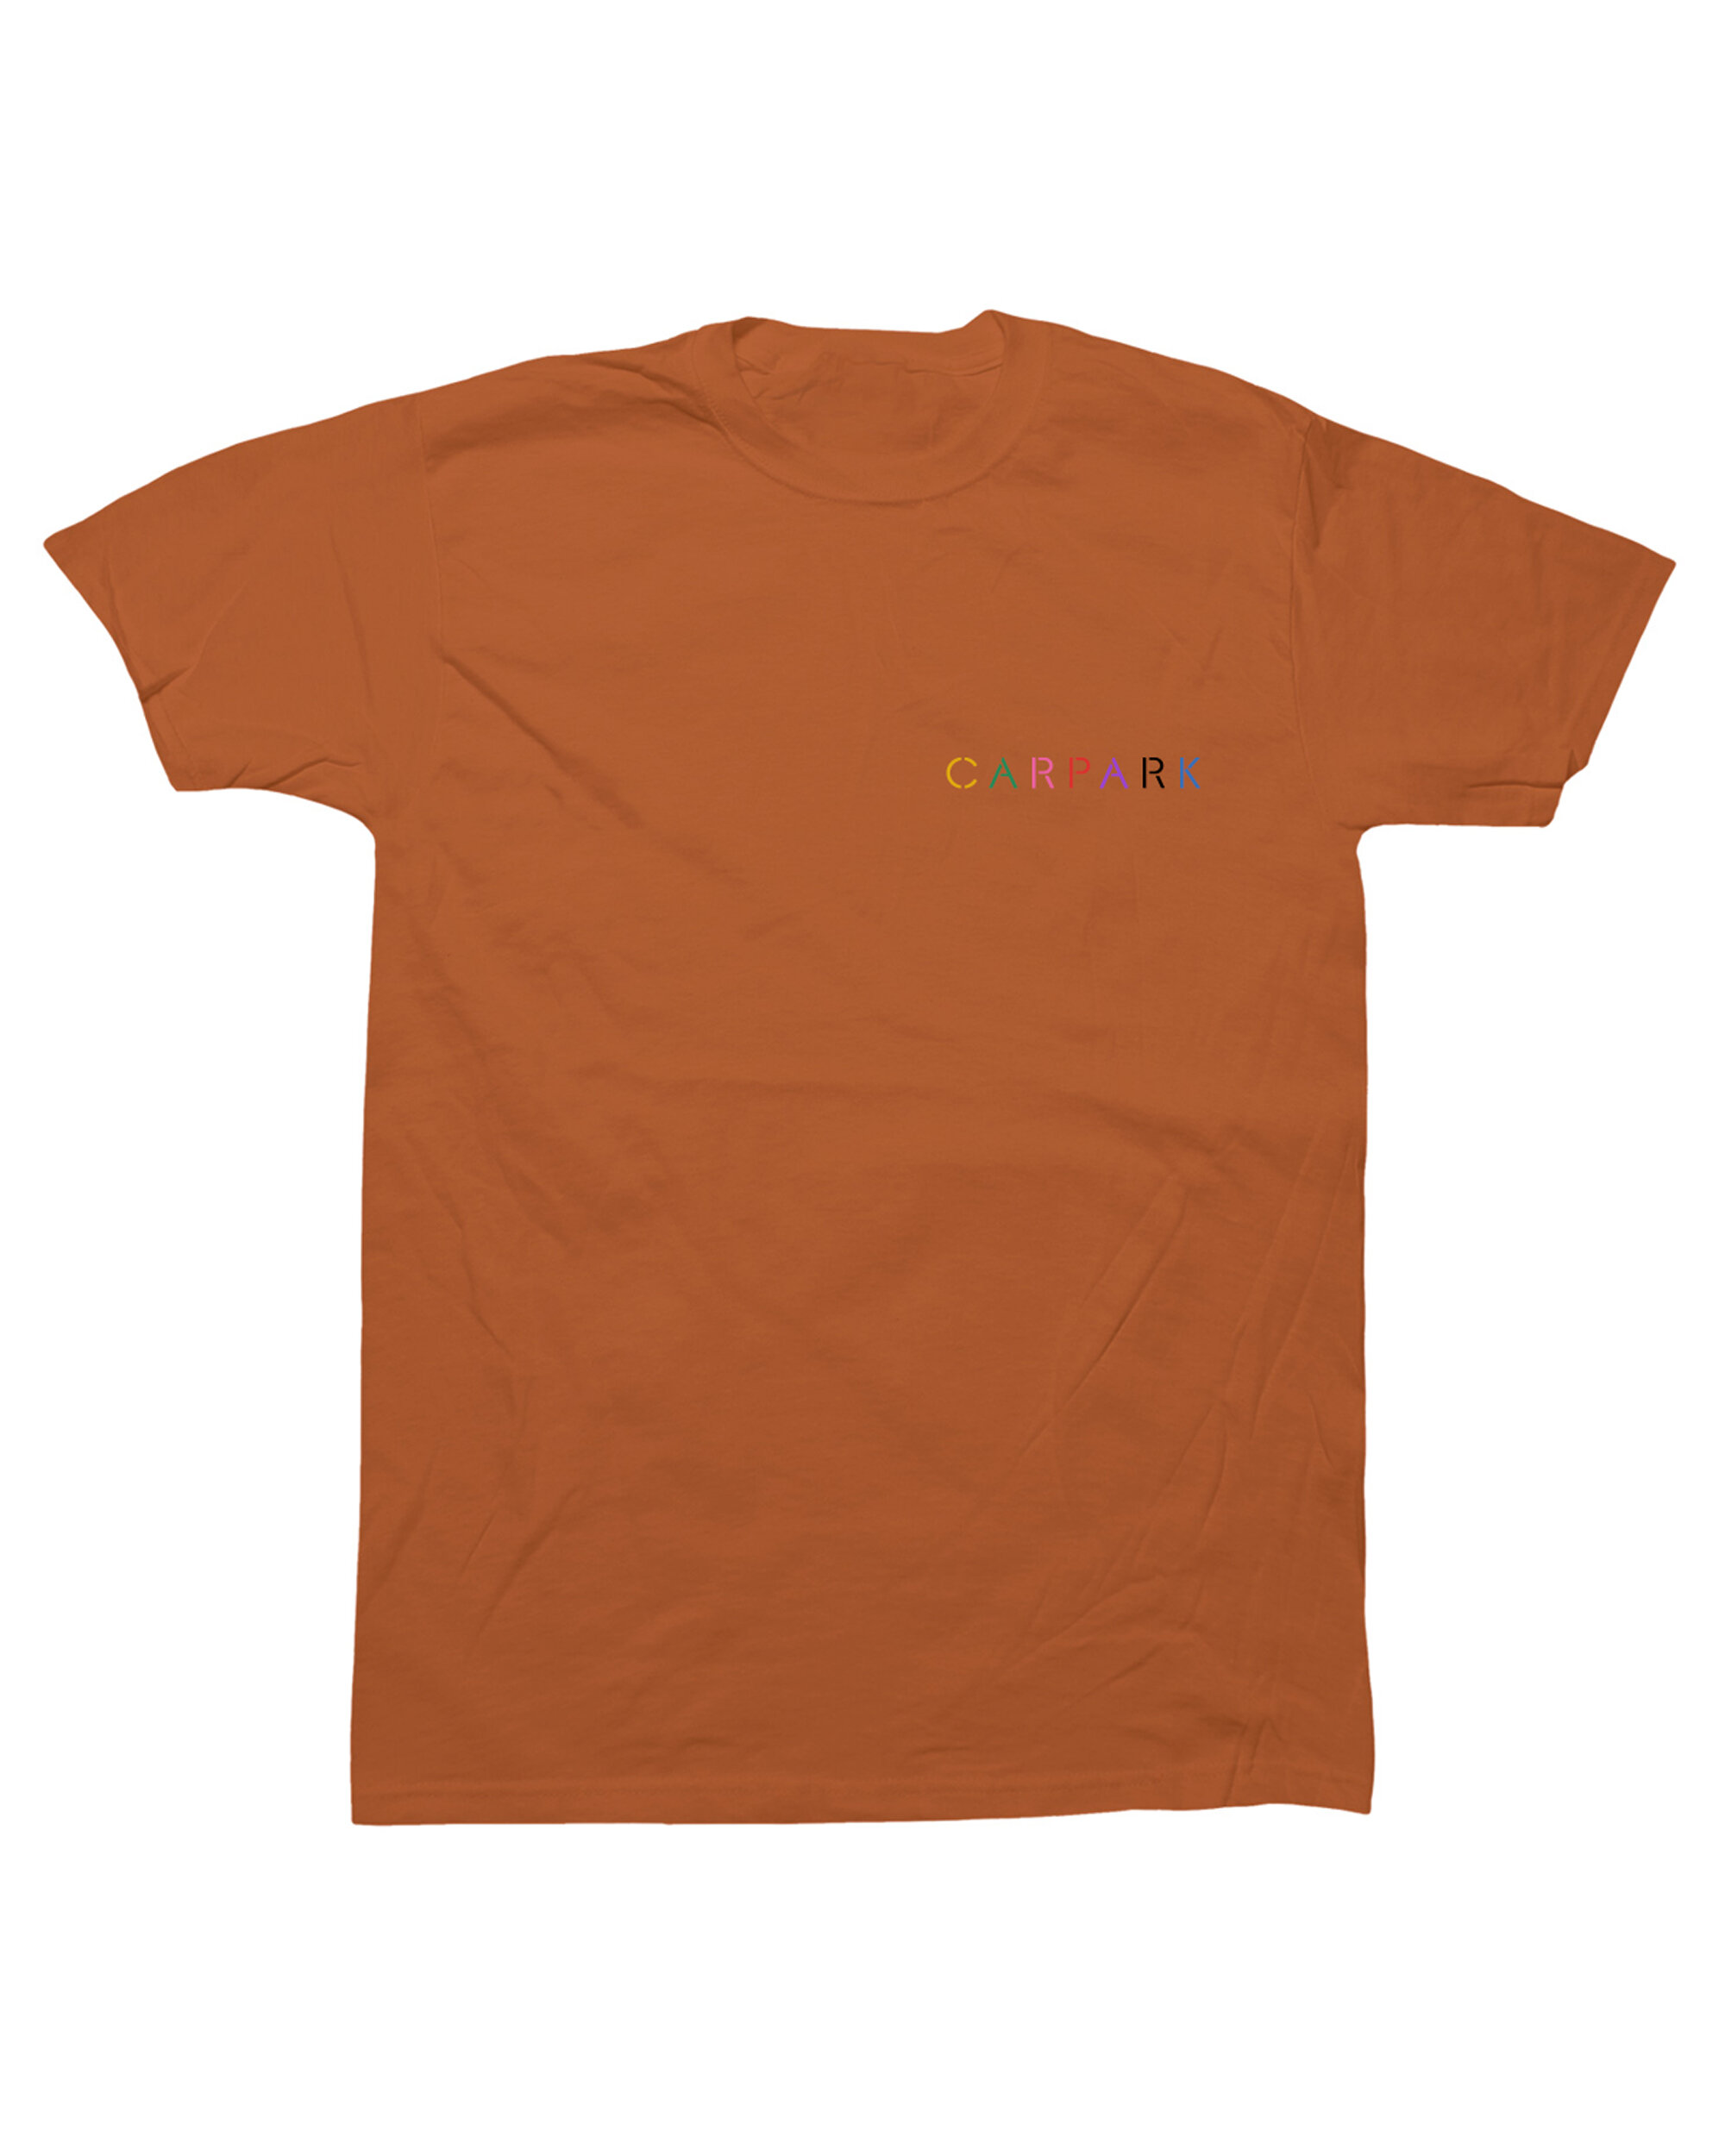 Carpark_Shirt (Texas Orange)_Mock Front.jpg